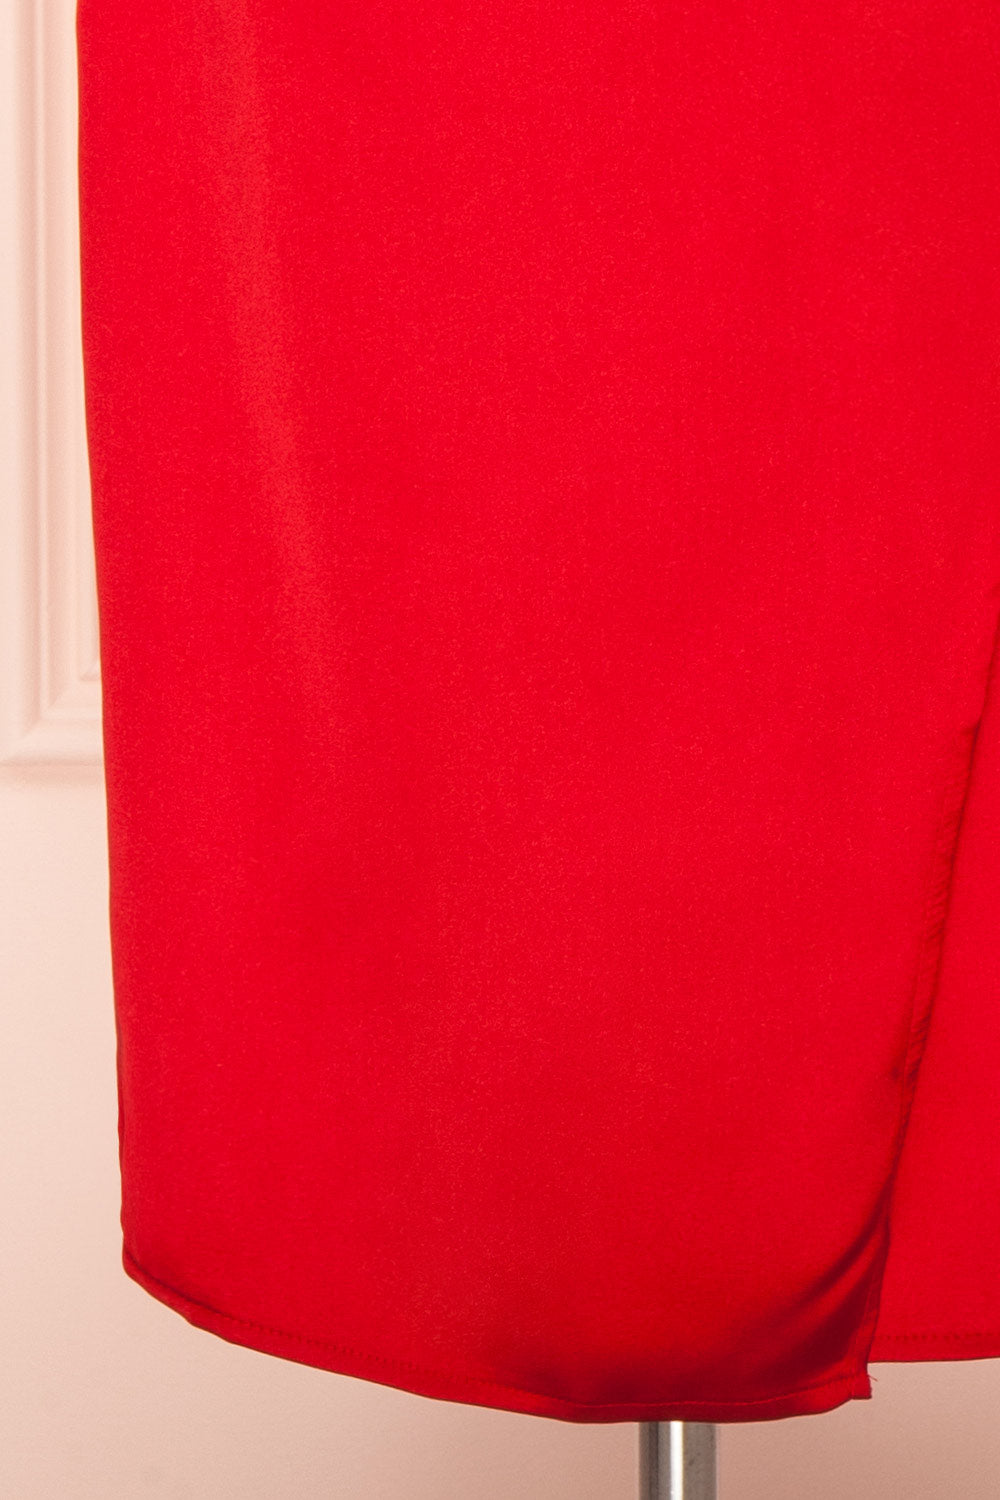 Chloee Red Silky Midi Slip Dress | Boutique 1861 bottom 